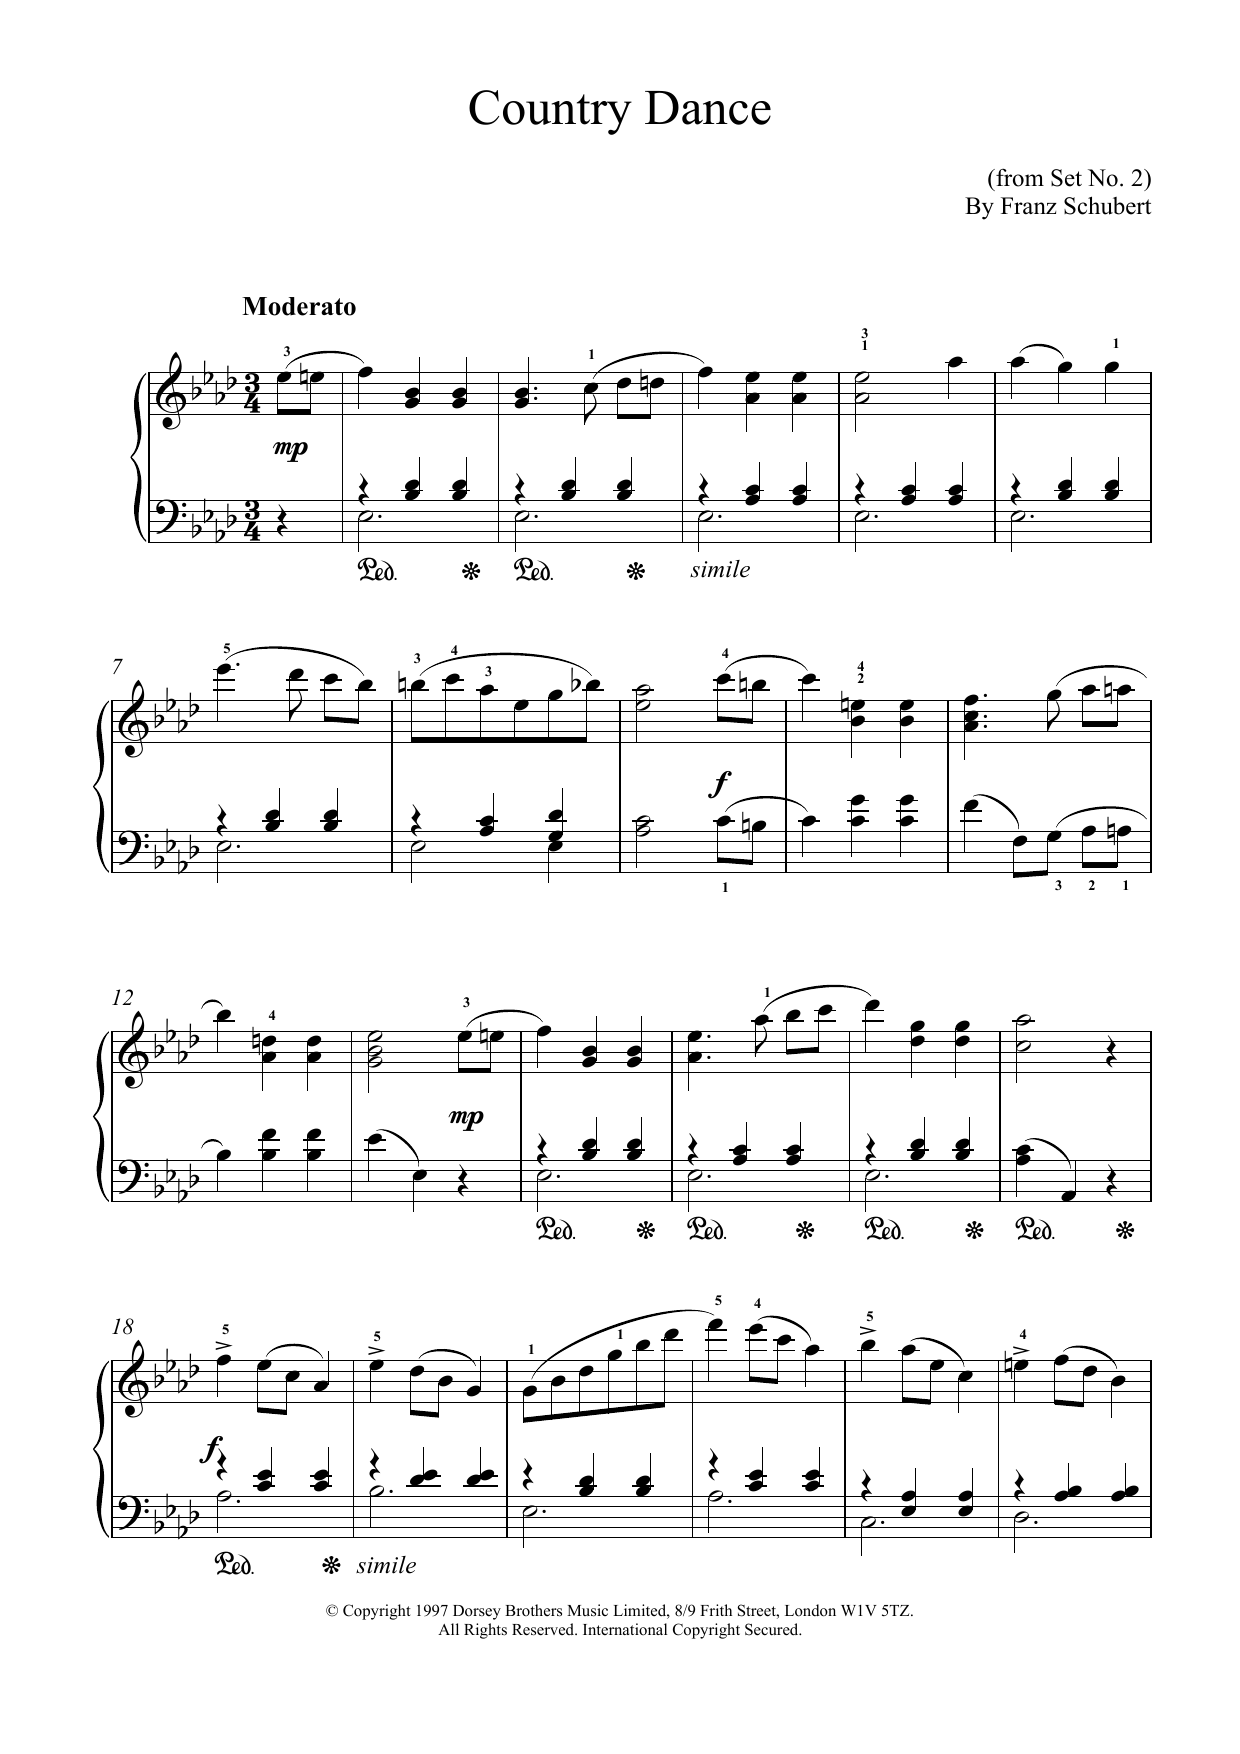 Franz Schubert Country Dance sheet music notes printable PDF score